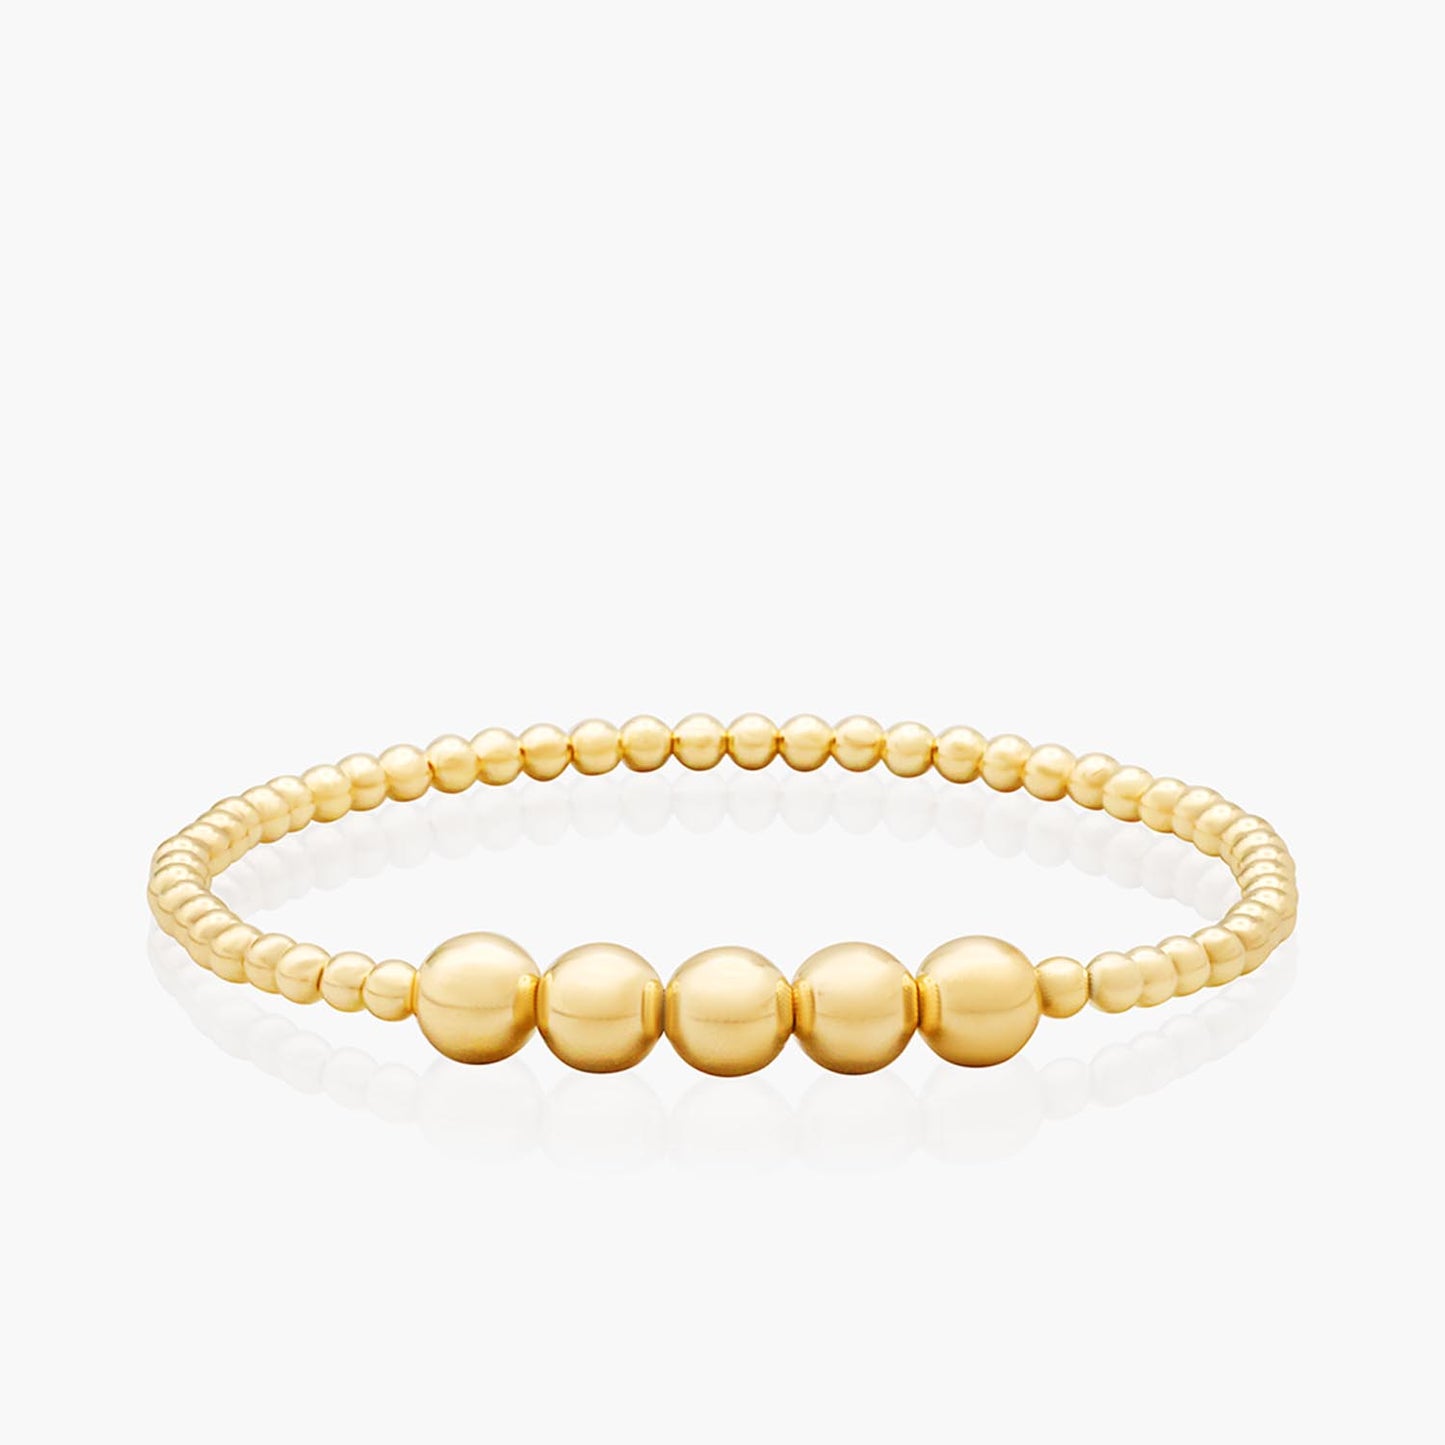 Playa Luna Jewelry Gold Filled Ball Bead Bracelet Riley